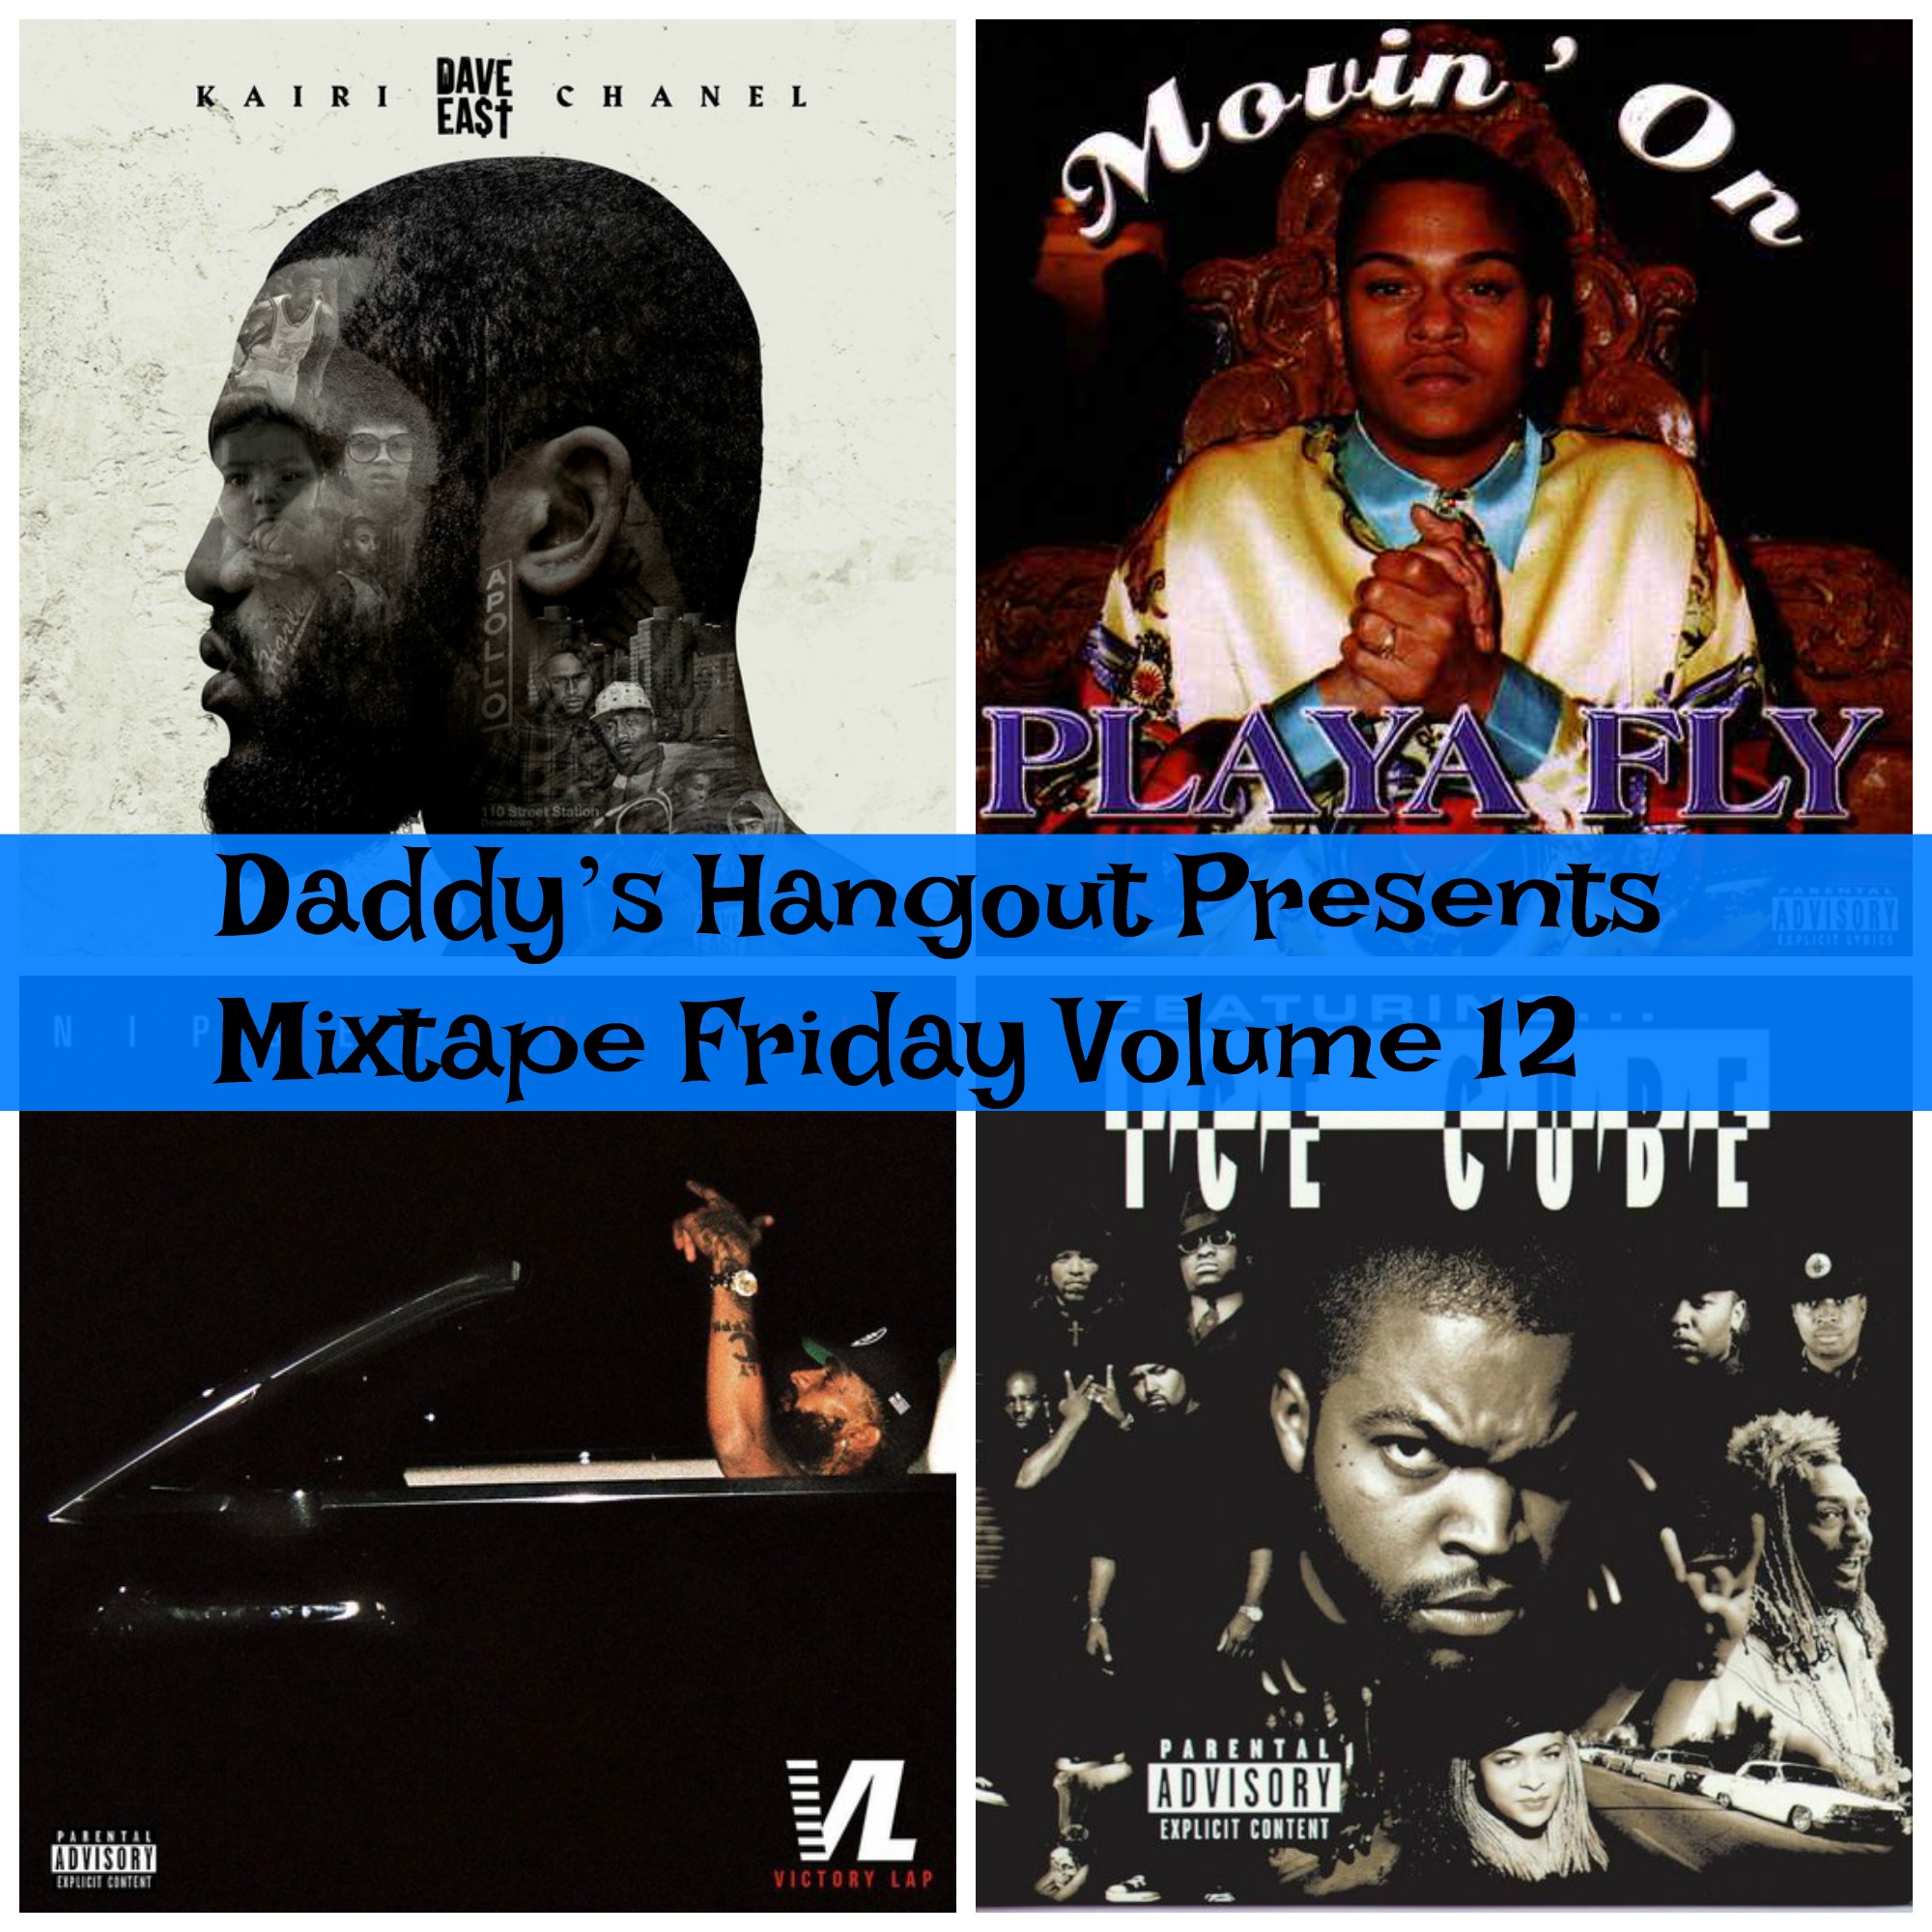 Daddy’s Hangout Presents Mixtape Friday Volume 12